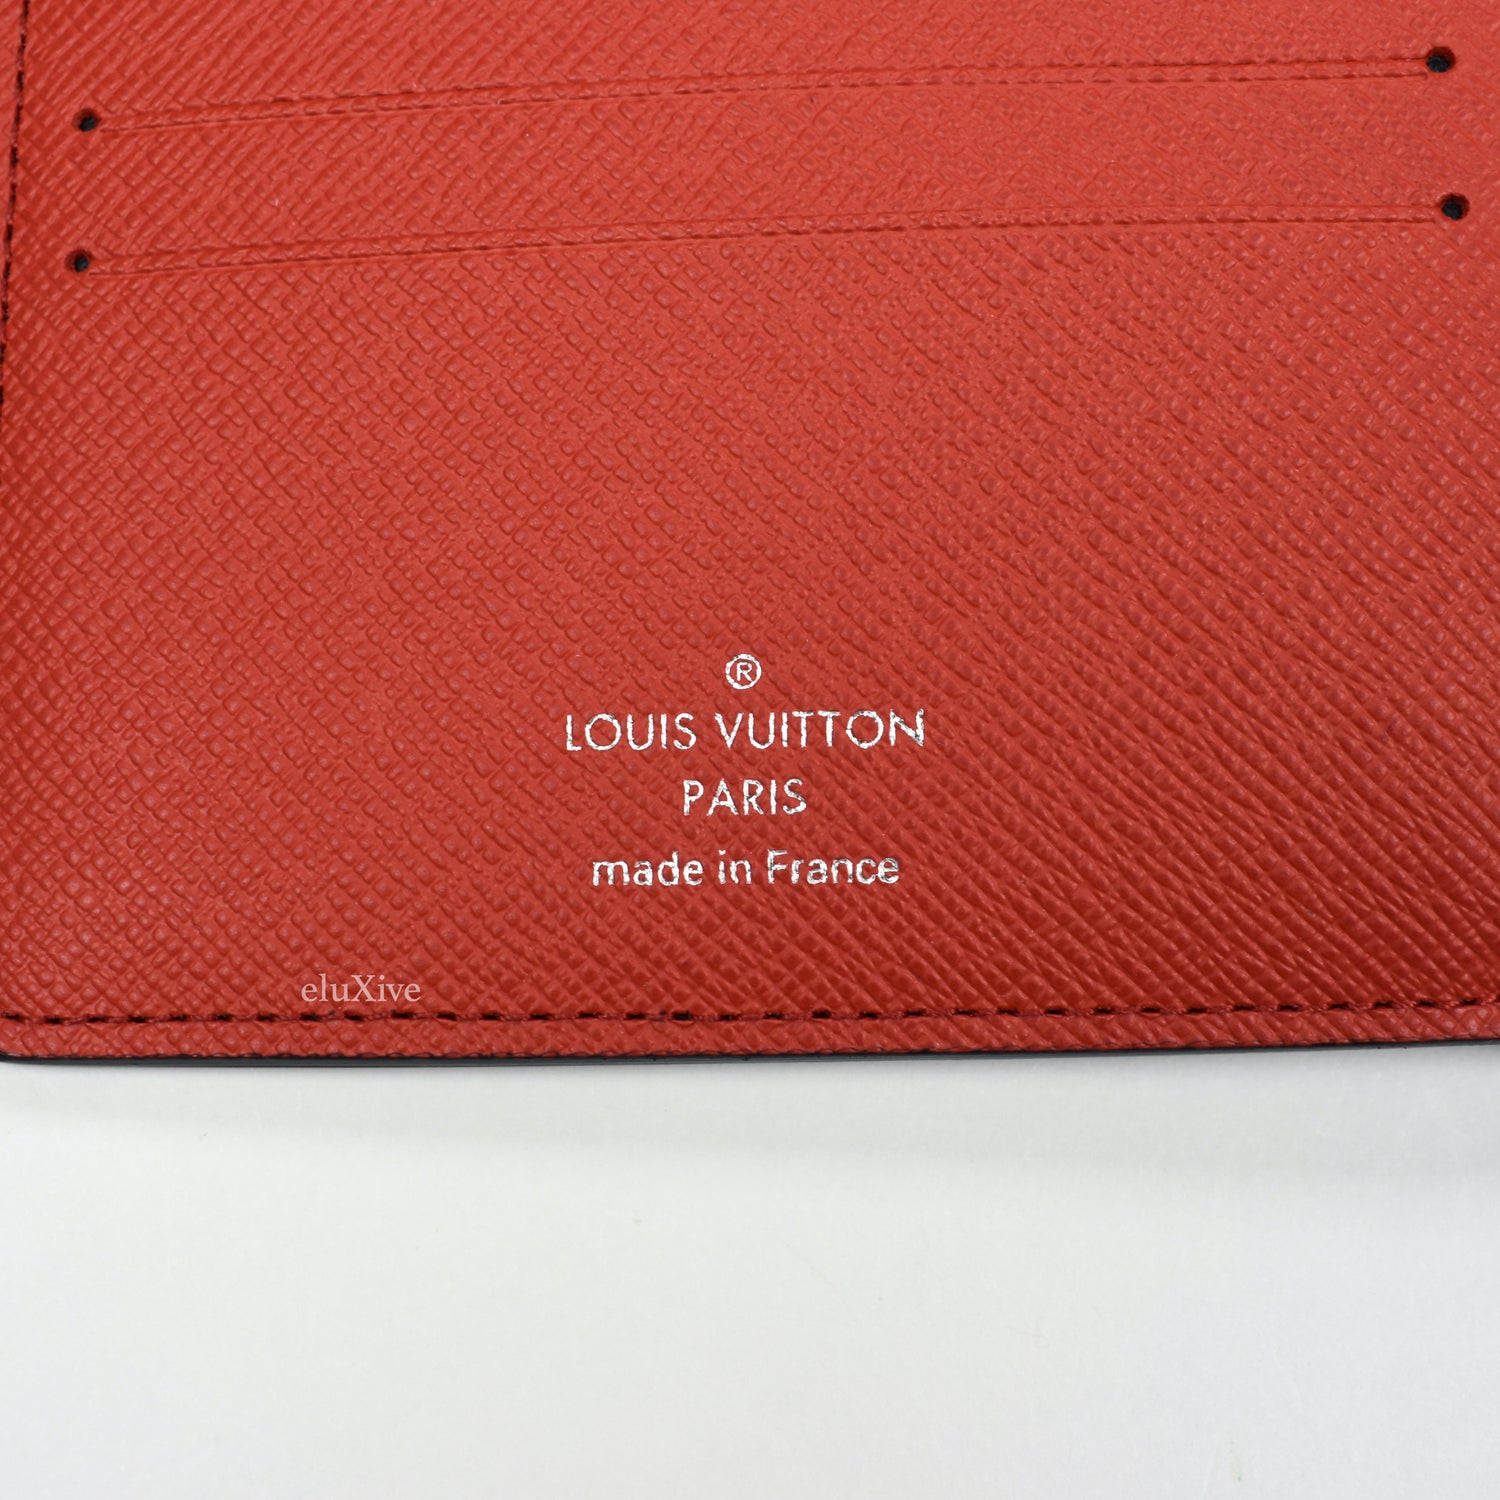 Supreme Louis Vuitton Wallet Price Philippines